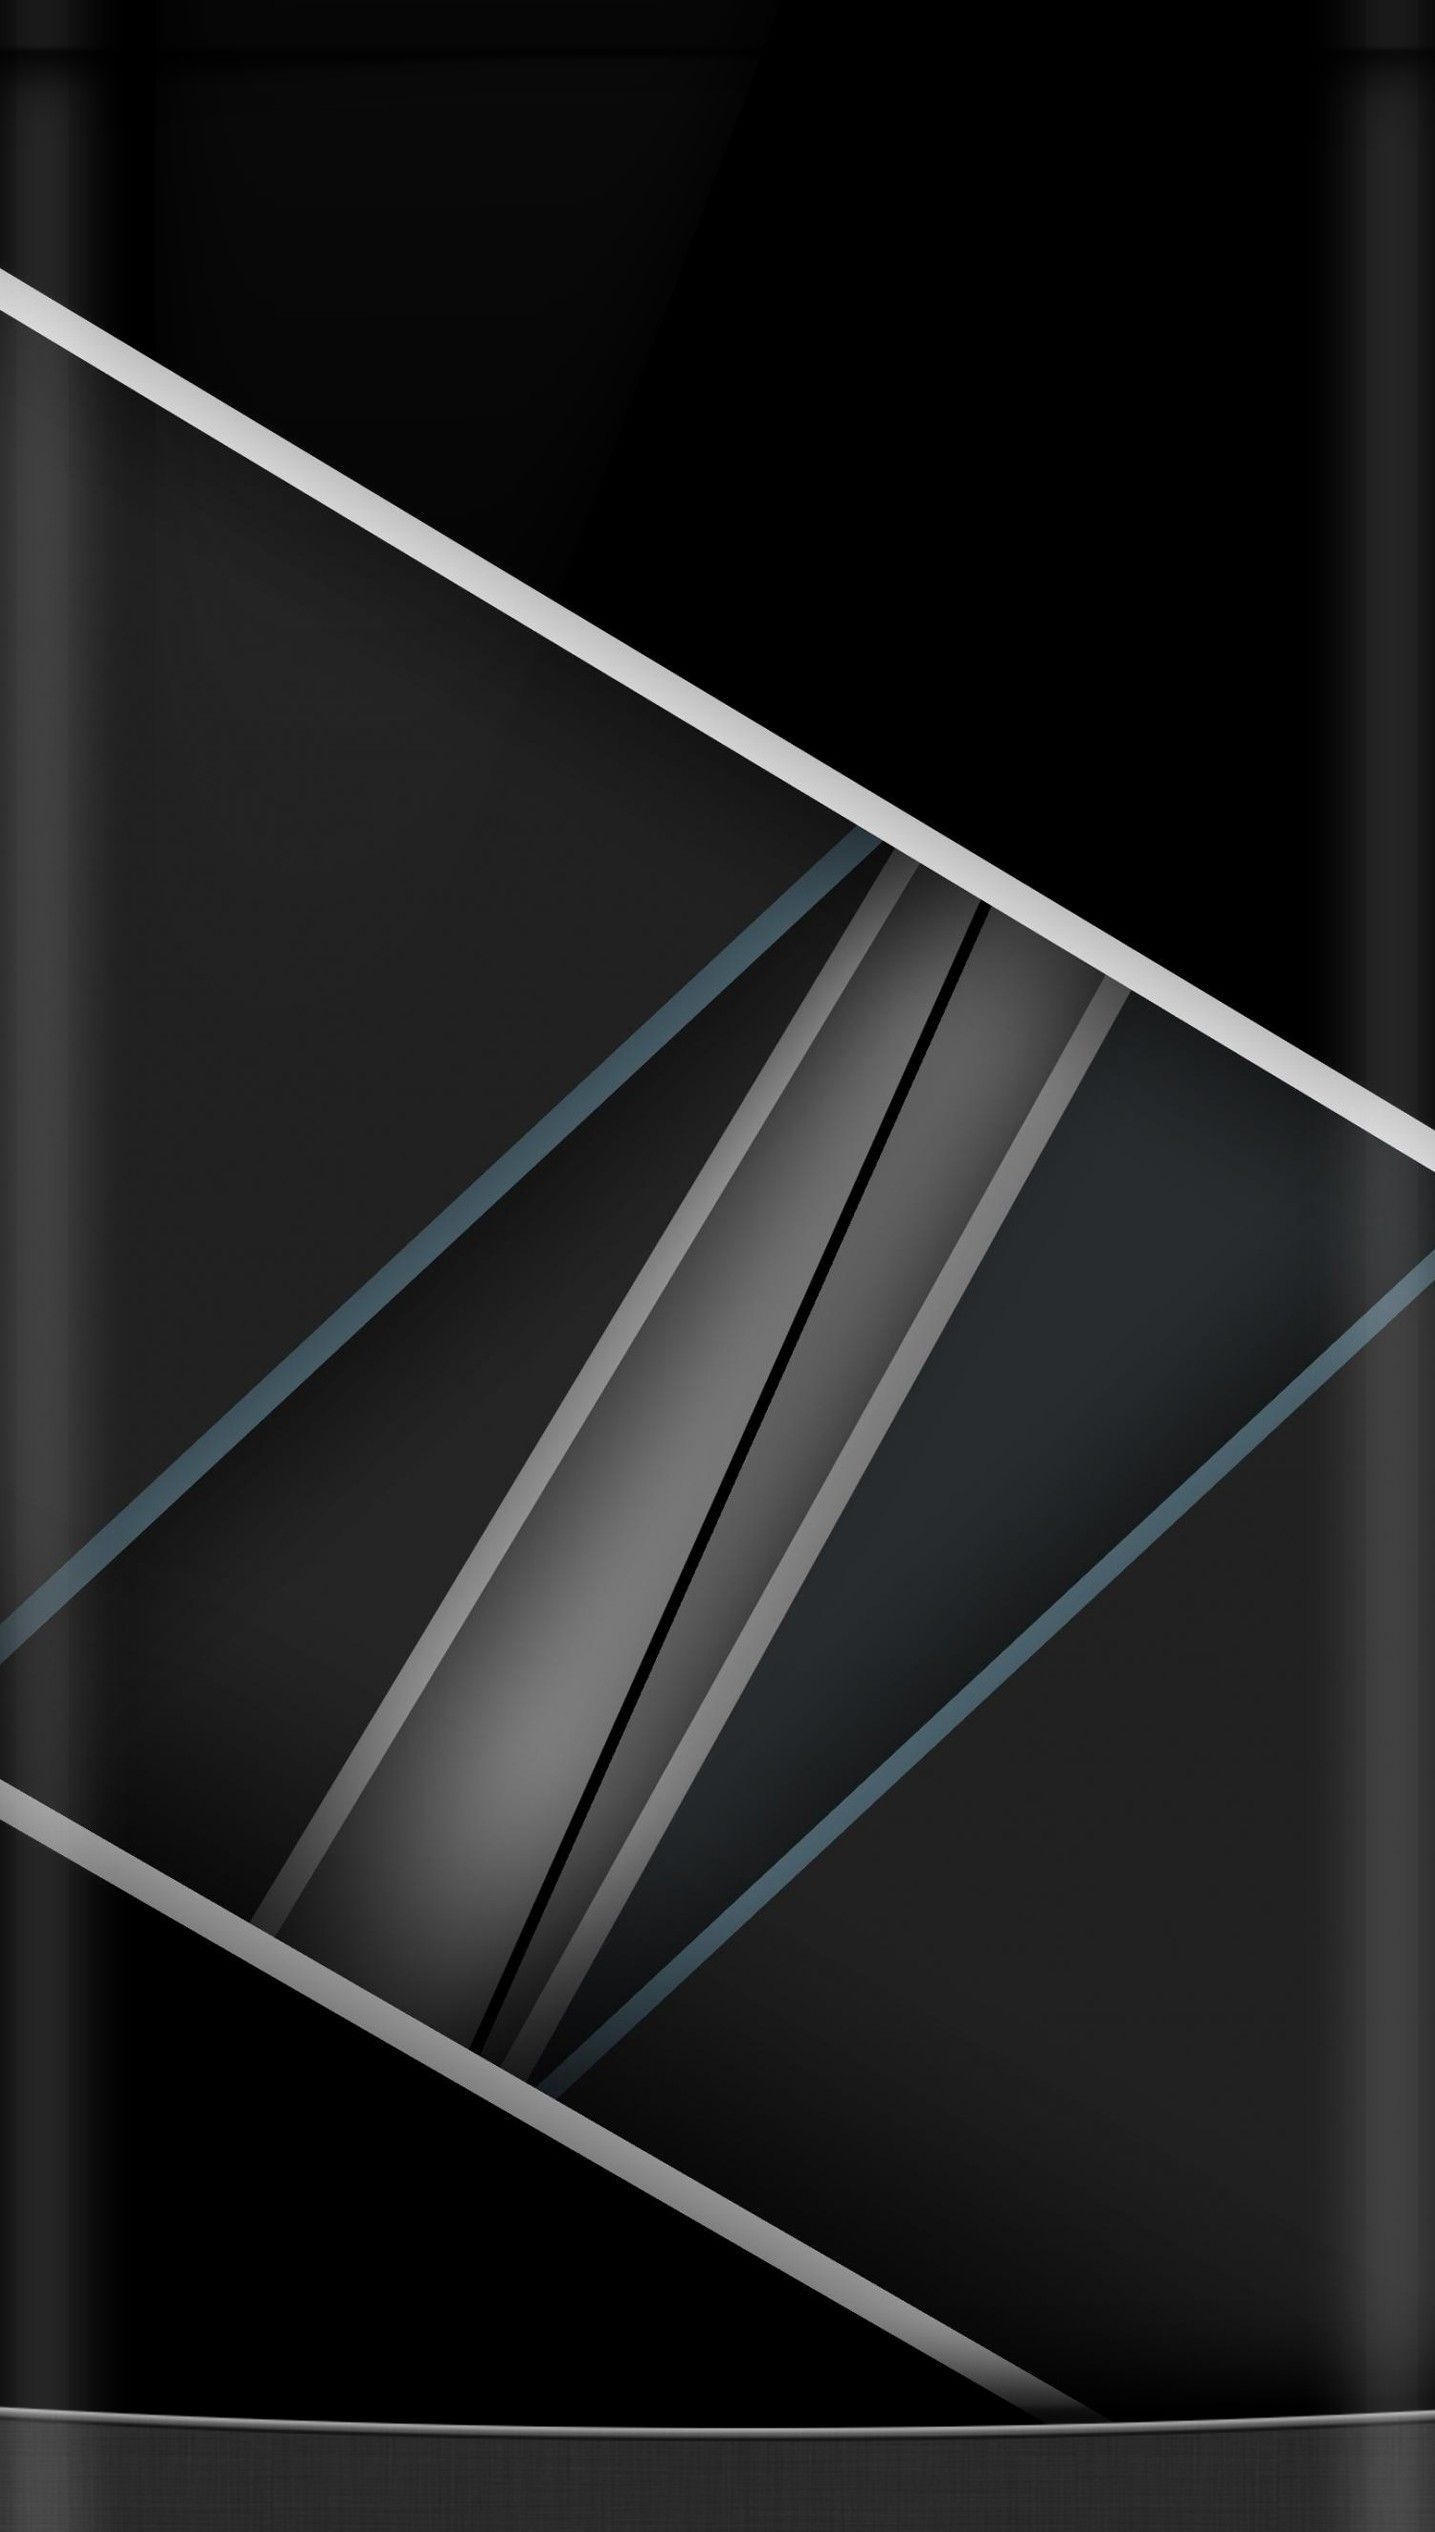 Black and Grey Abstract Wallpaper. Phone wallpaper, Phone screen wallpaper, Live wallpaper iphone